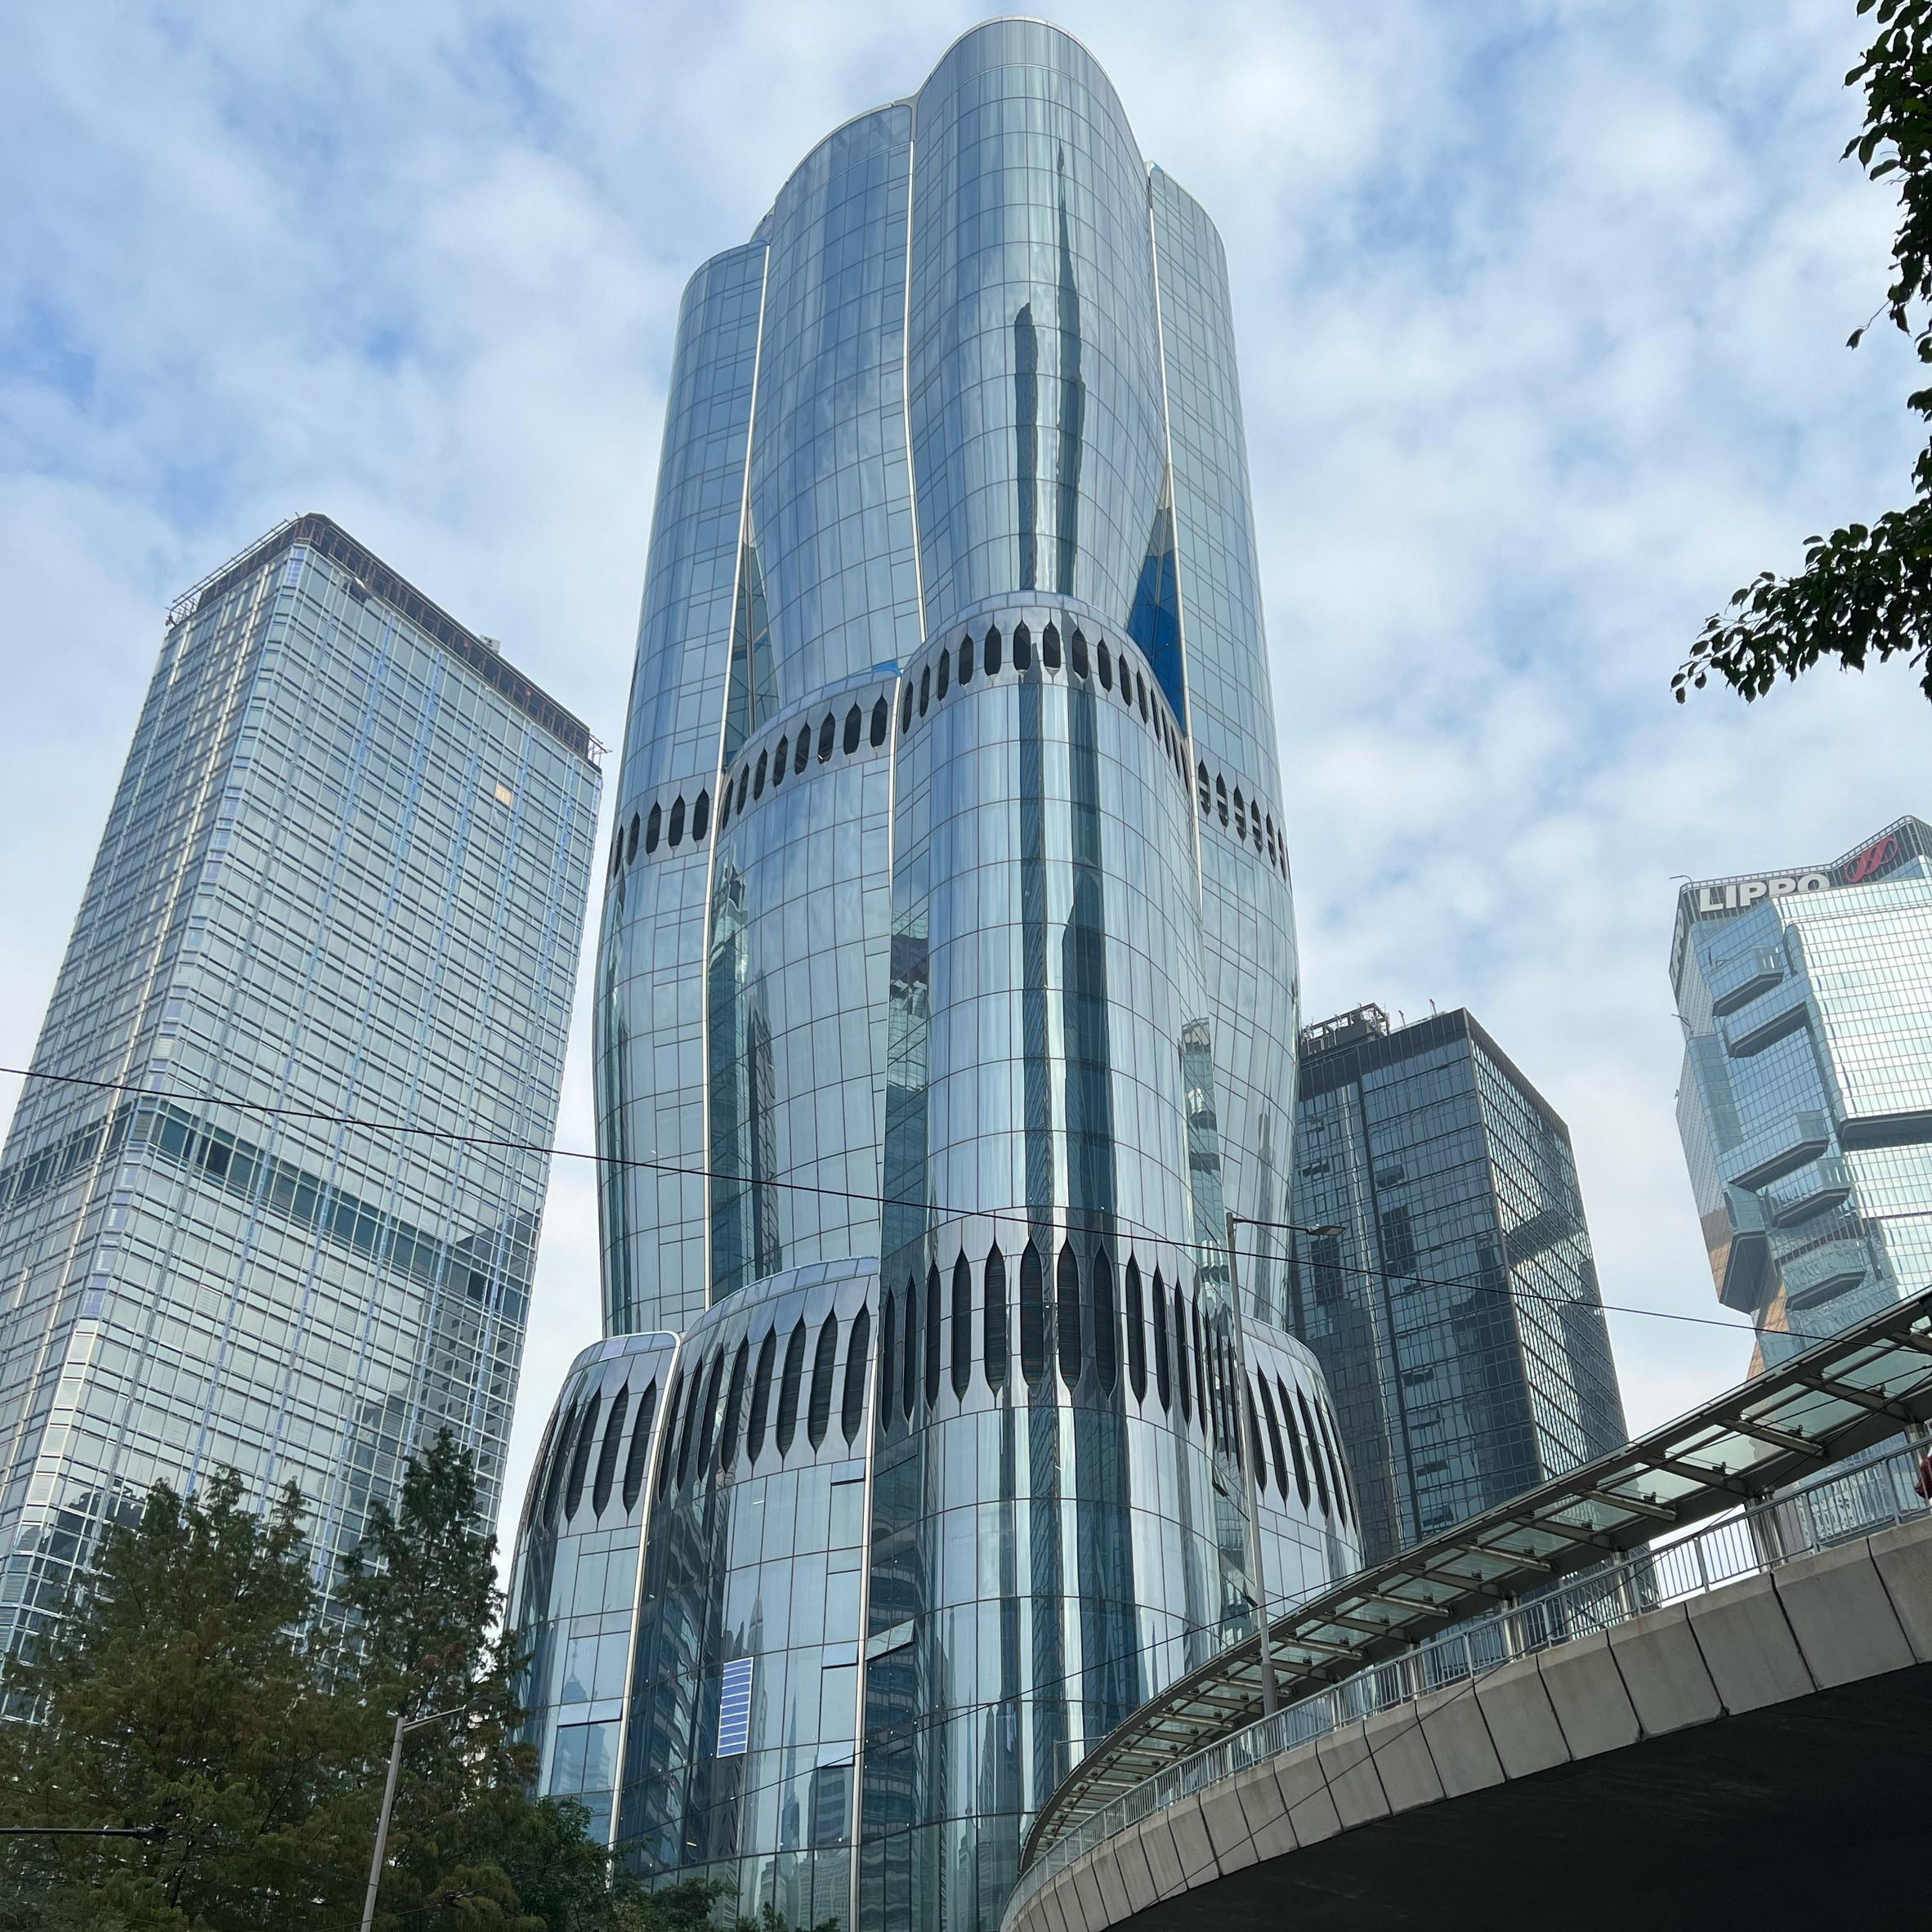 The Henderson skyscraper in Hong Kong by Zaha Hadid Architects